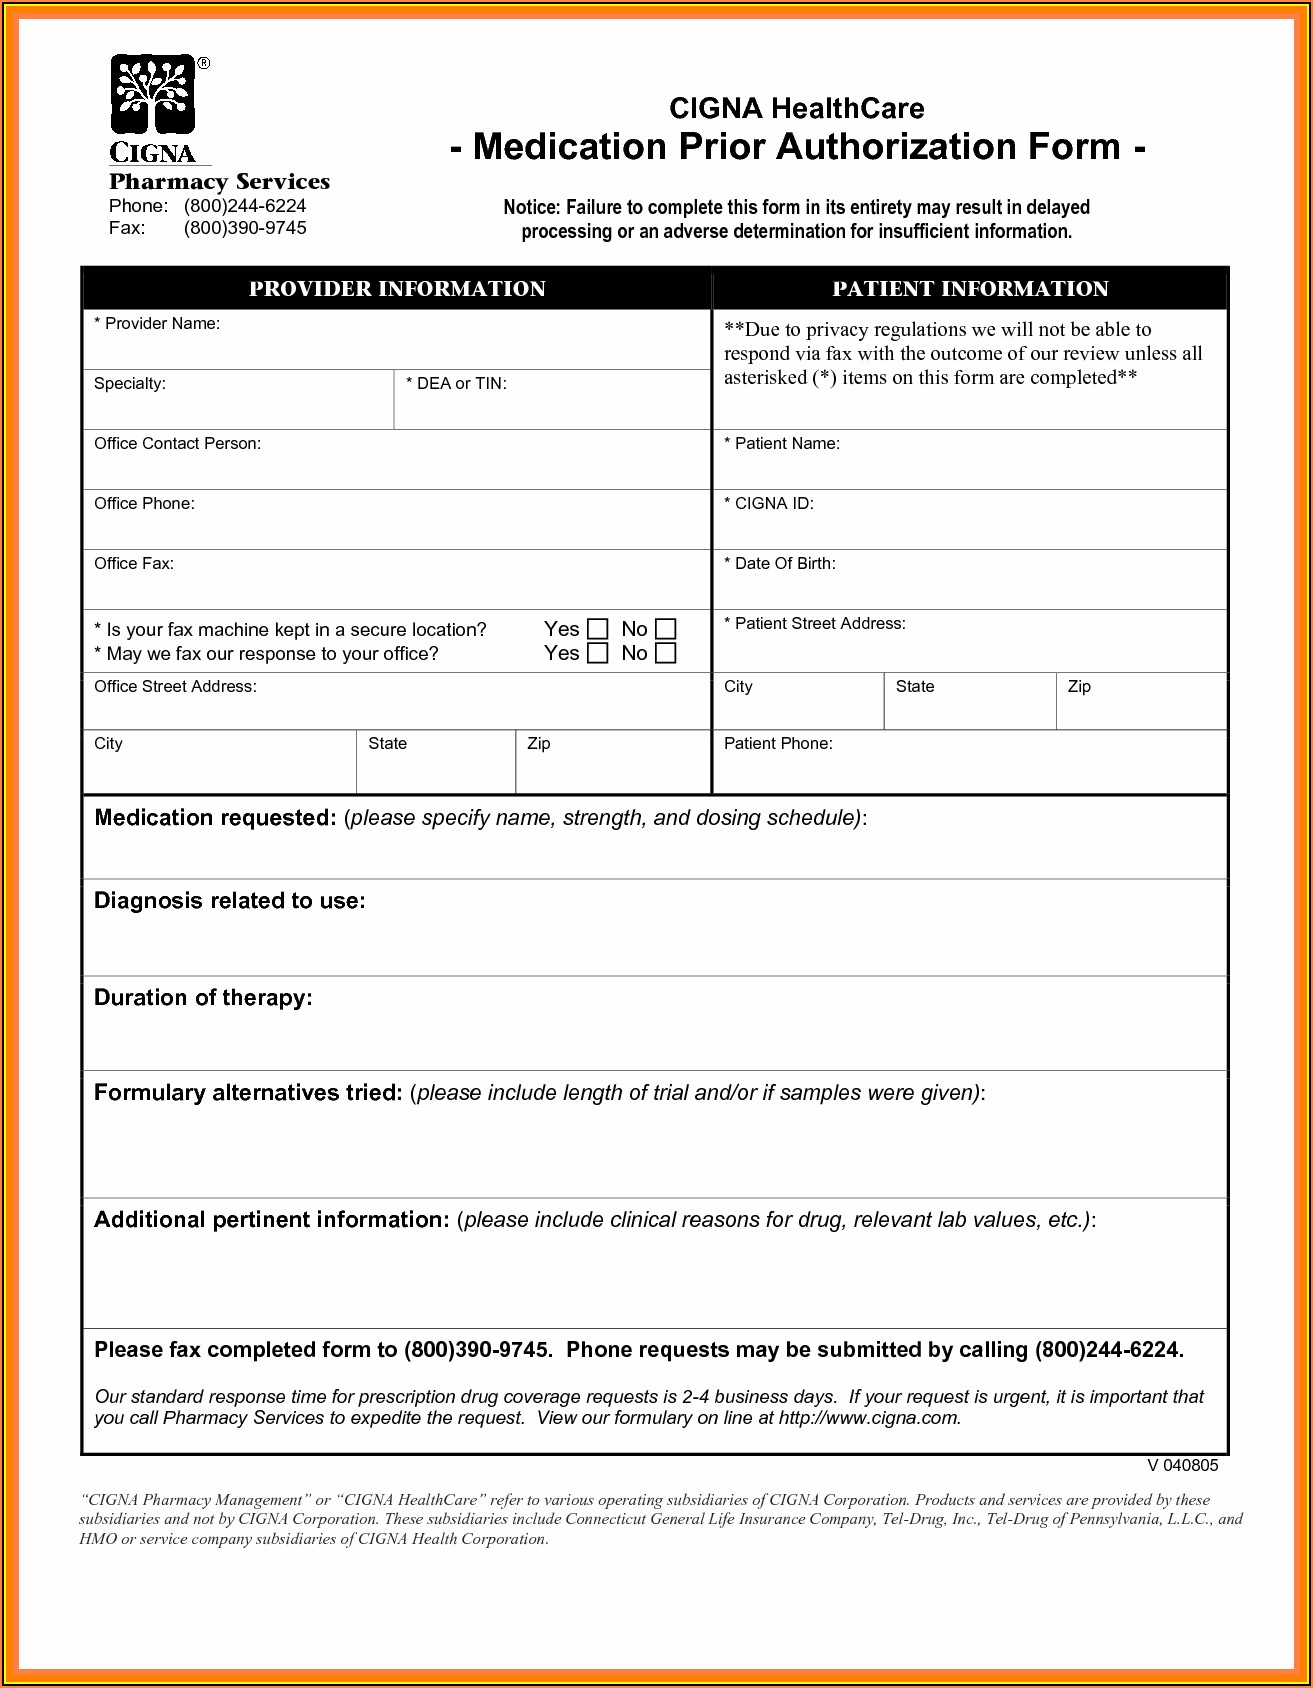 medicare-advantage-medication-prior-authorization-forms-form-resume